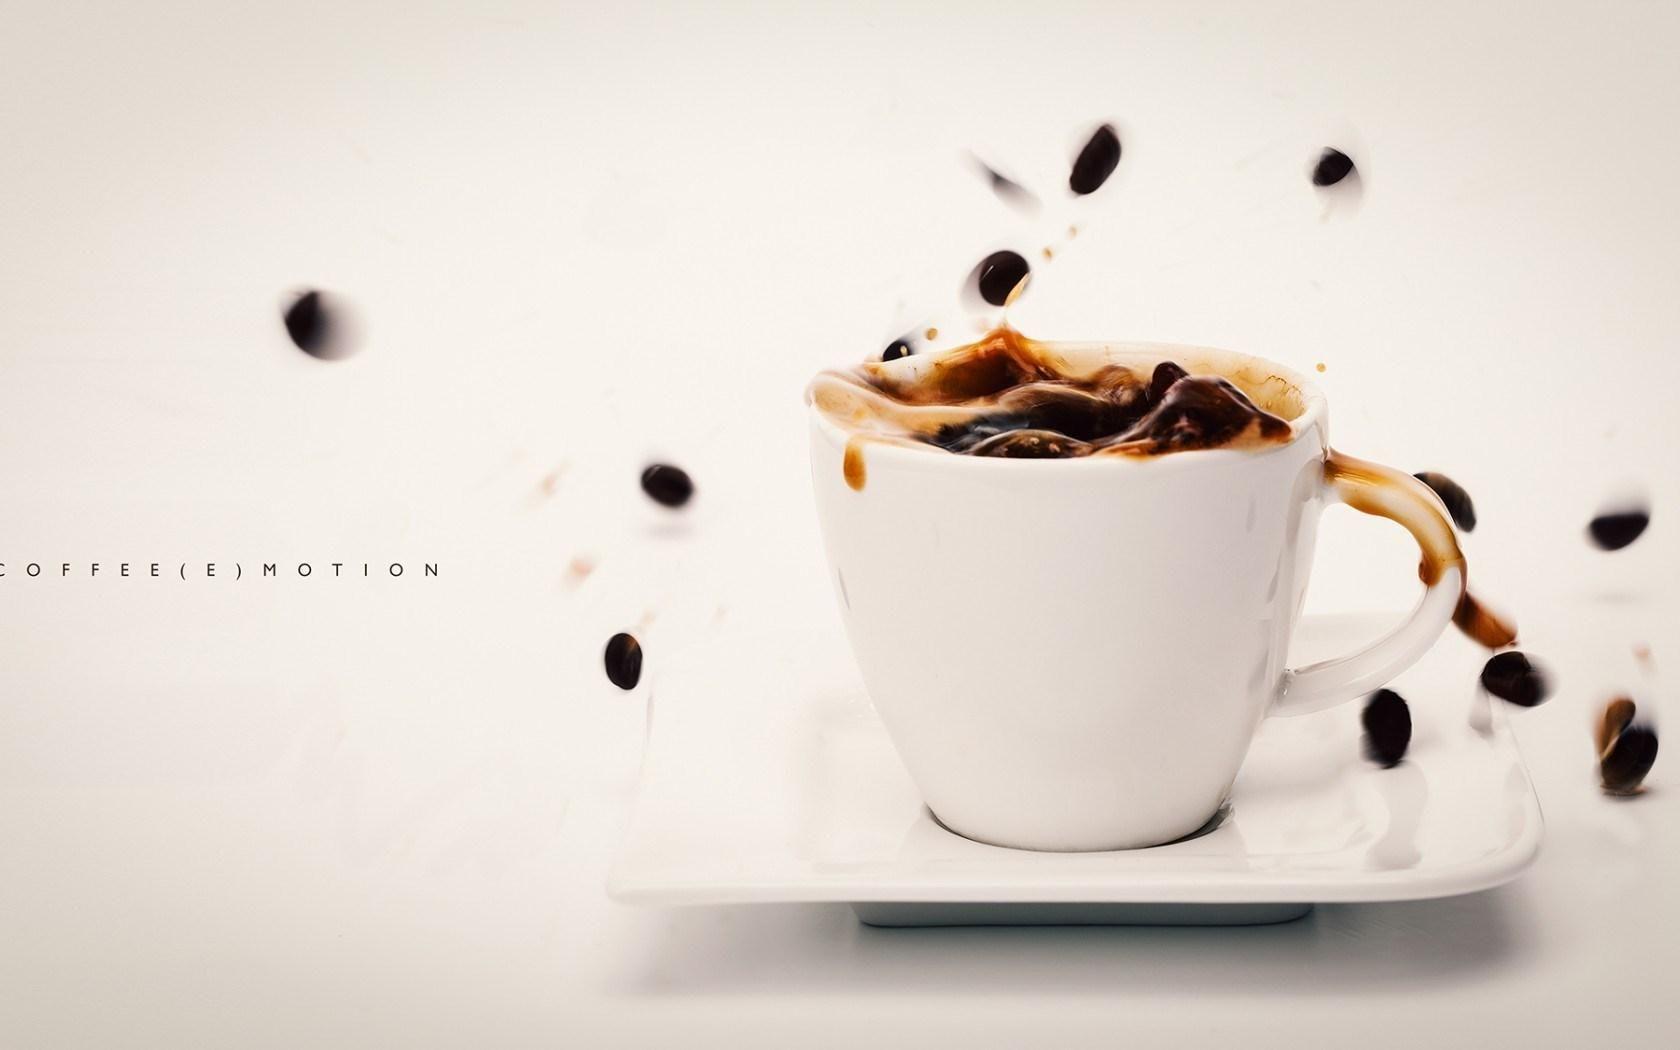 HD Coffee Mood Cup Wallpaper. All things coffee. Good